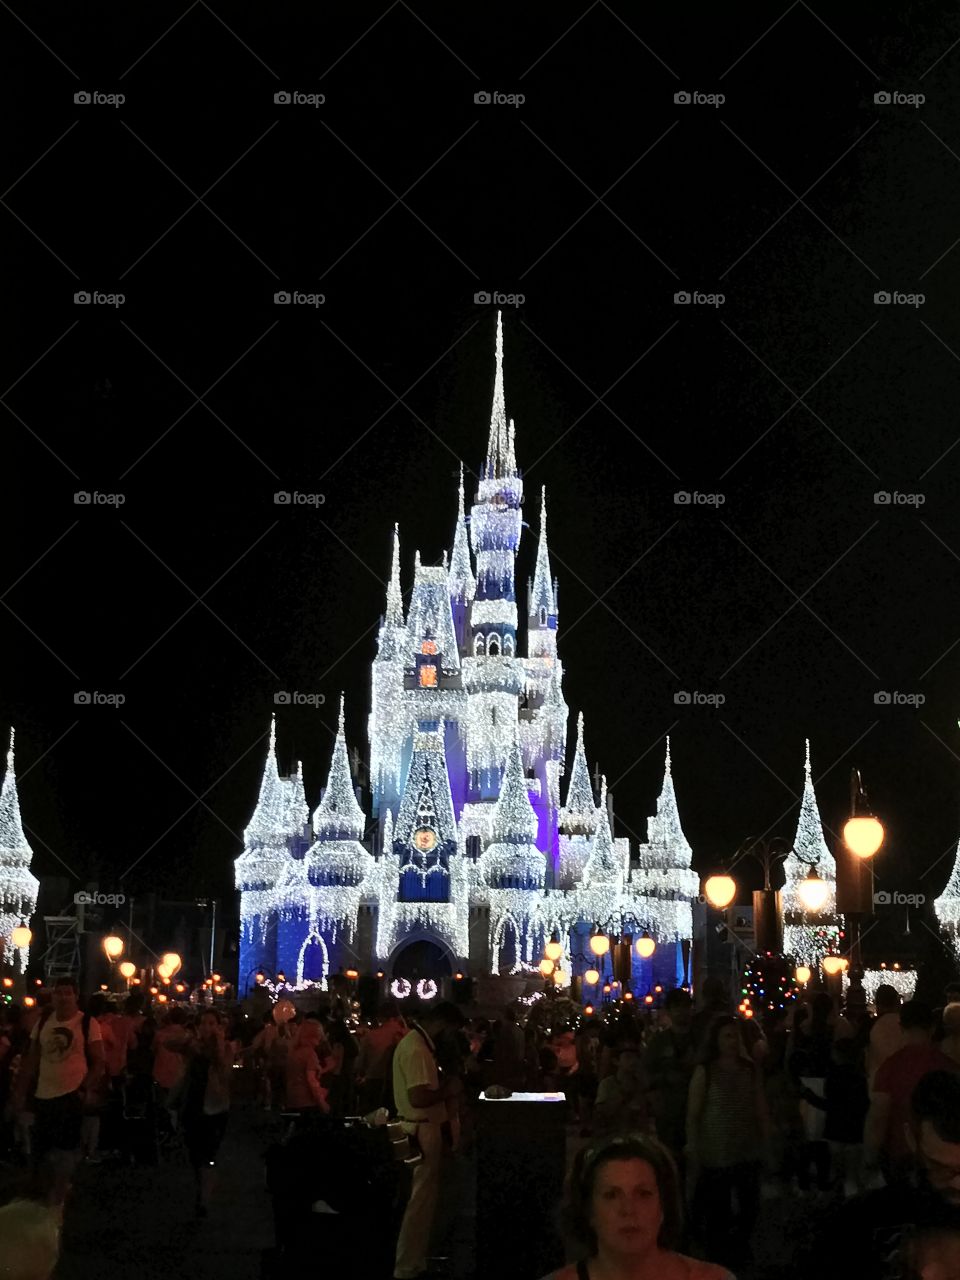 Cinderella’s castle in Walt Disney World. Love how beautiful the castle looks at nighttime. 